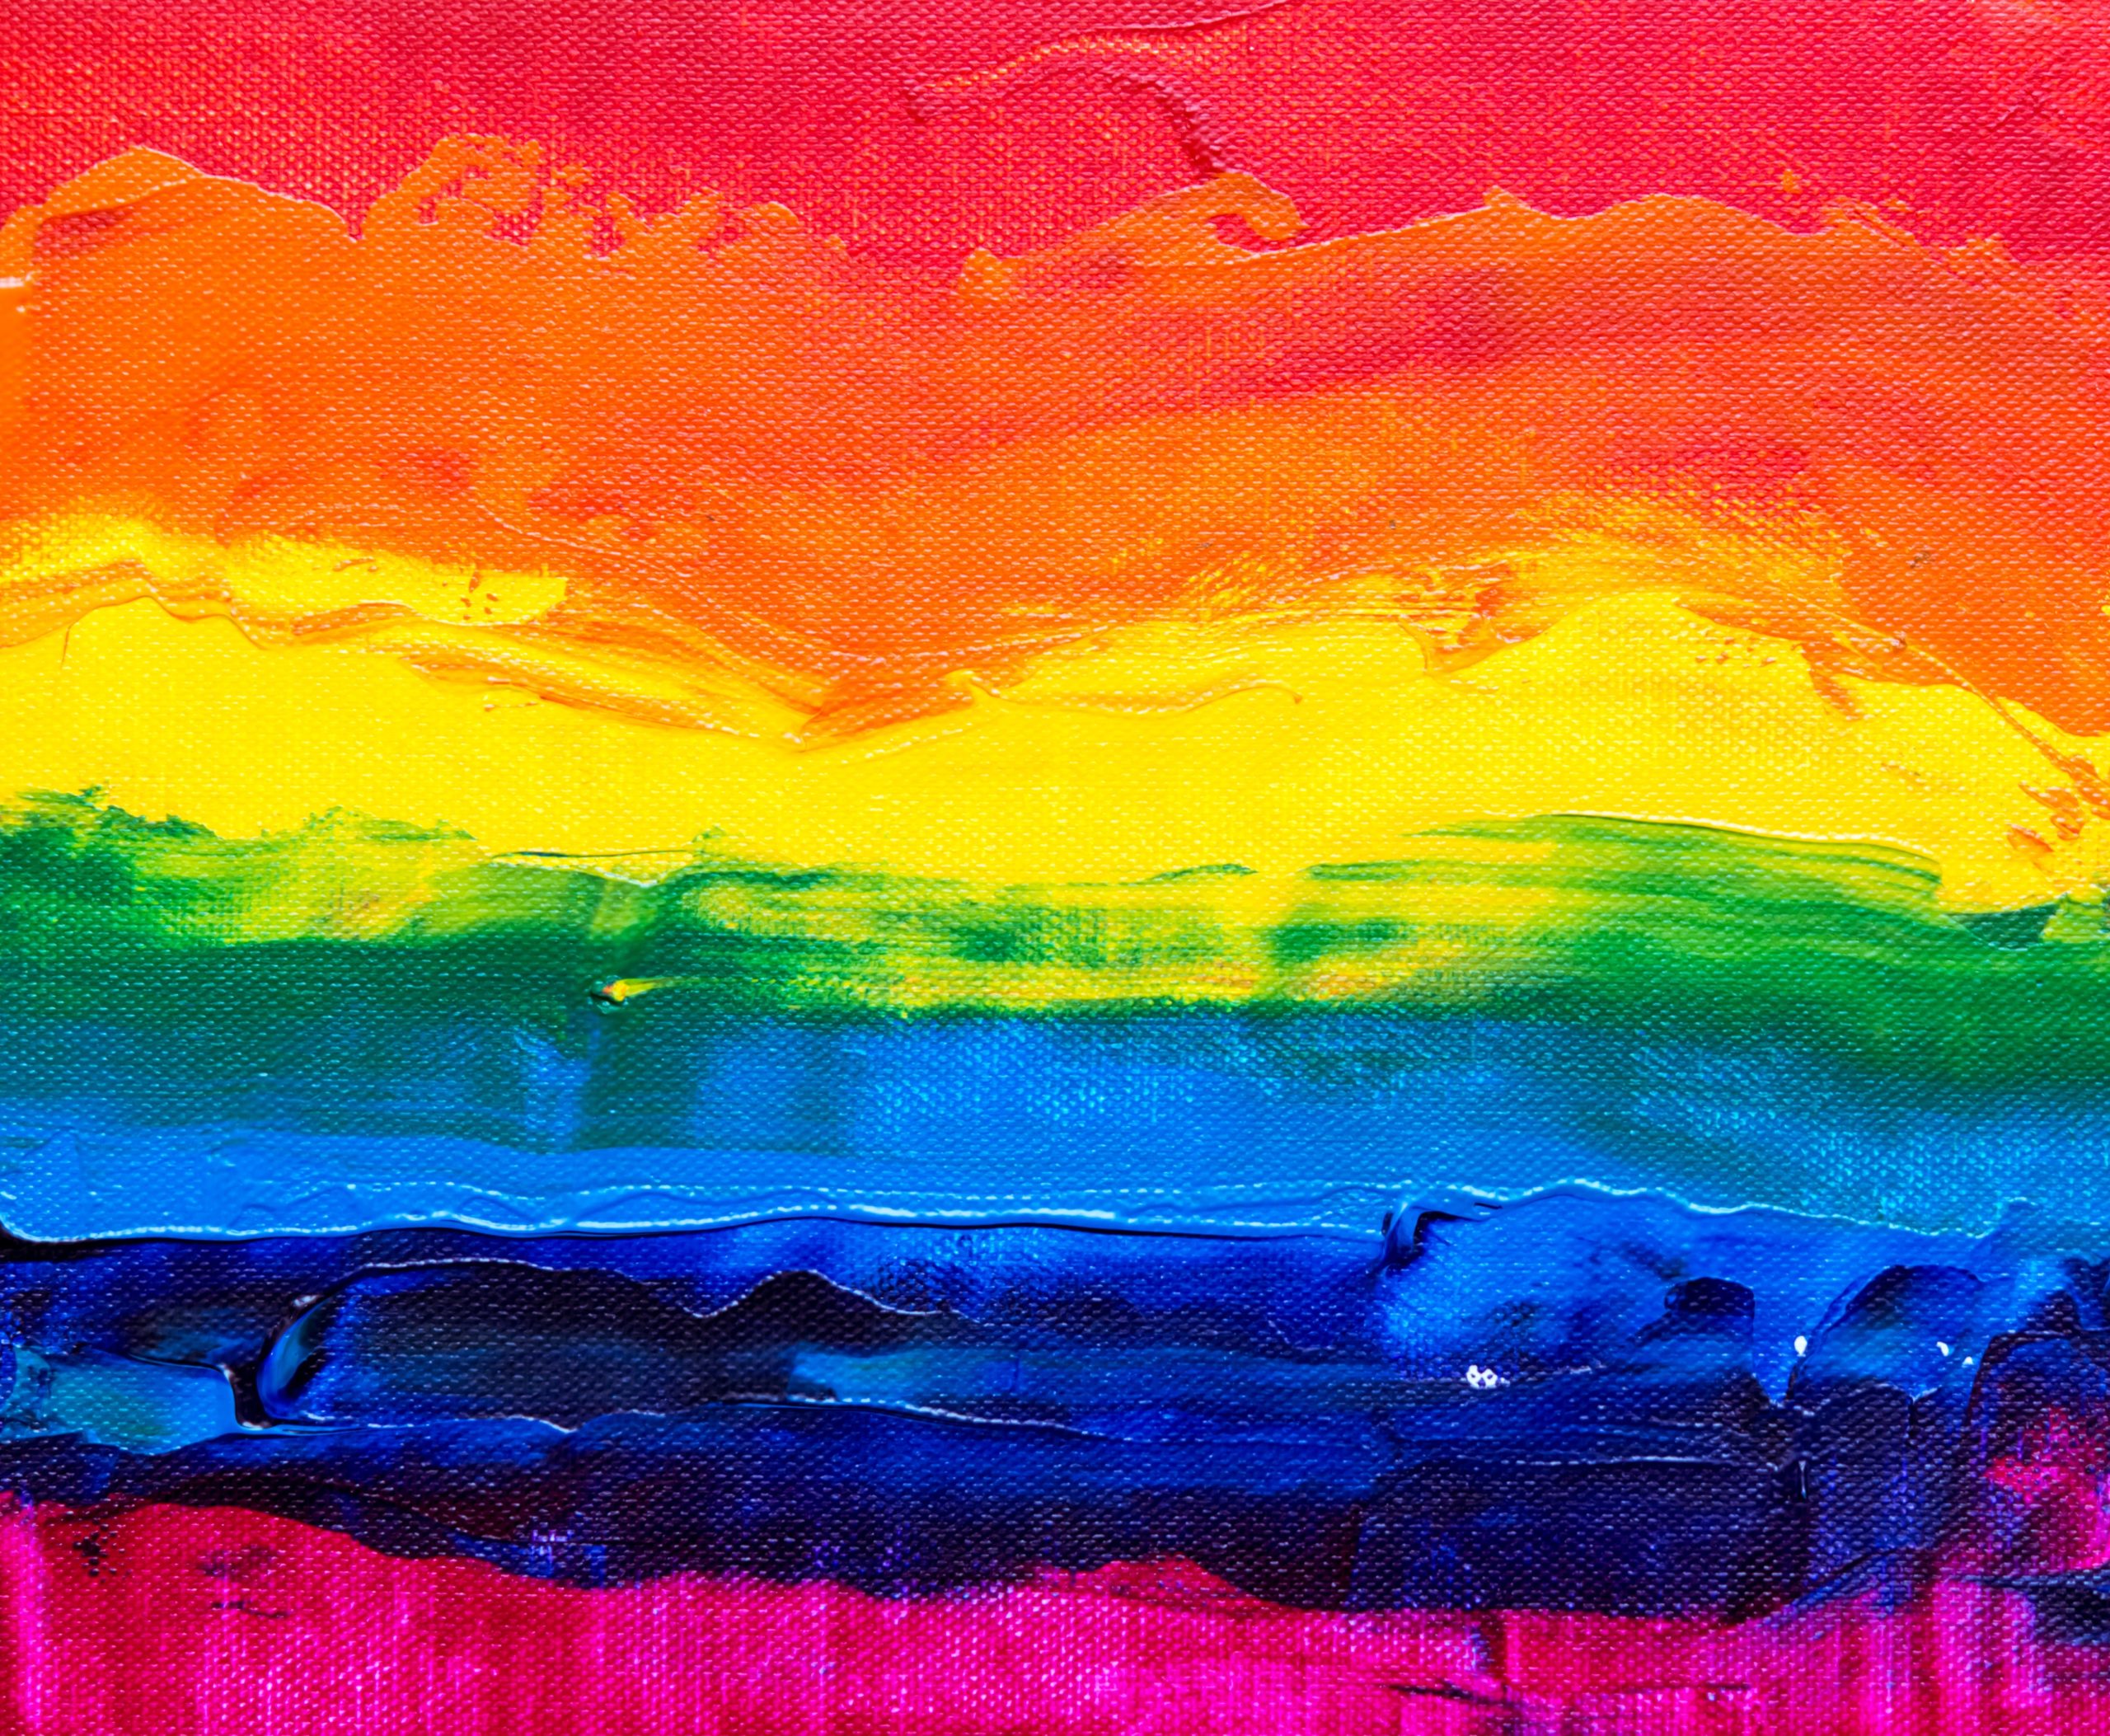 A rainbow painted on canvas